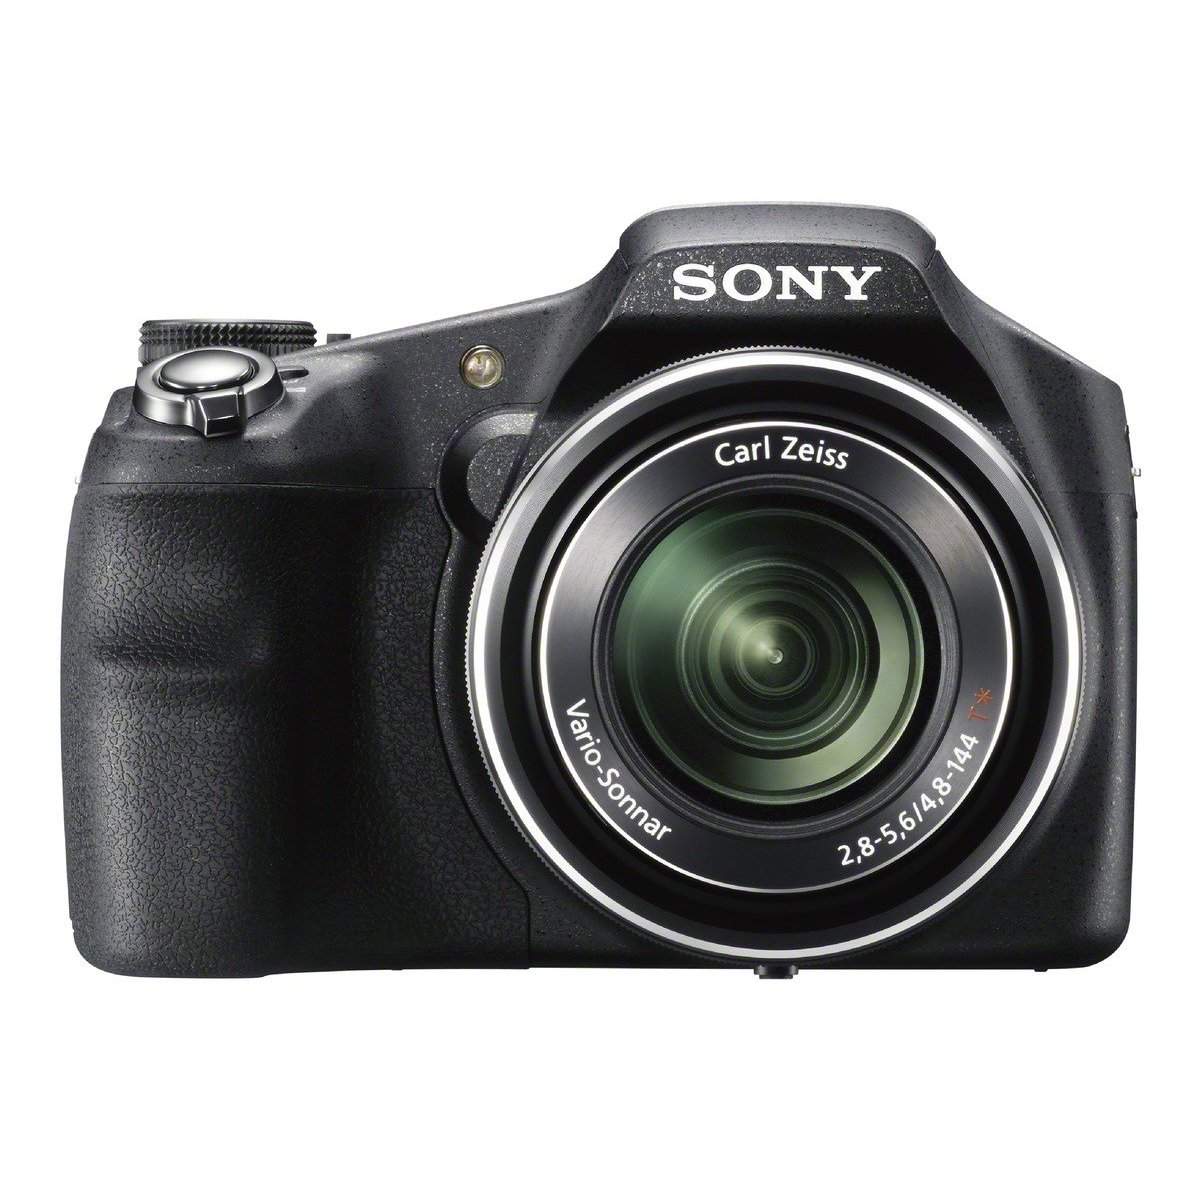 Sony Cyber-shot DSC-HX200V 18.2 MP Exmor R CMOS Digital Camera Review